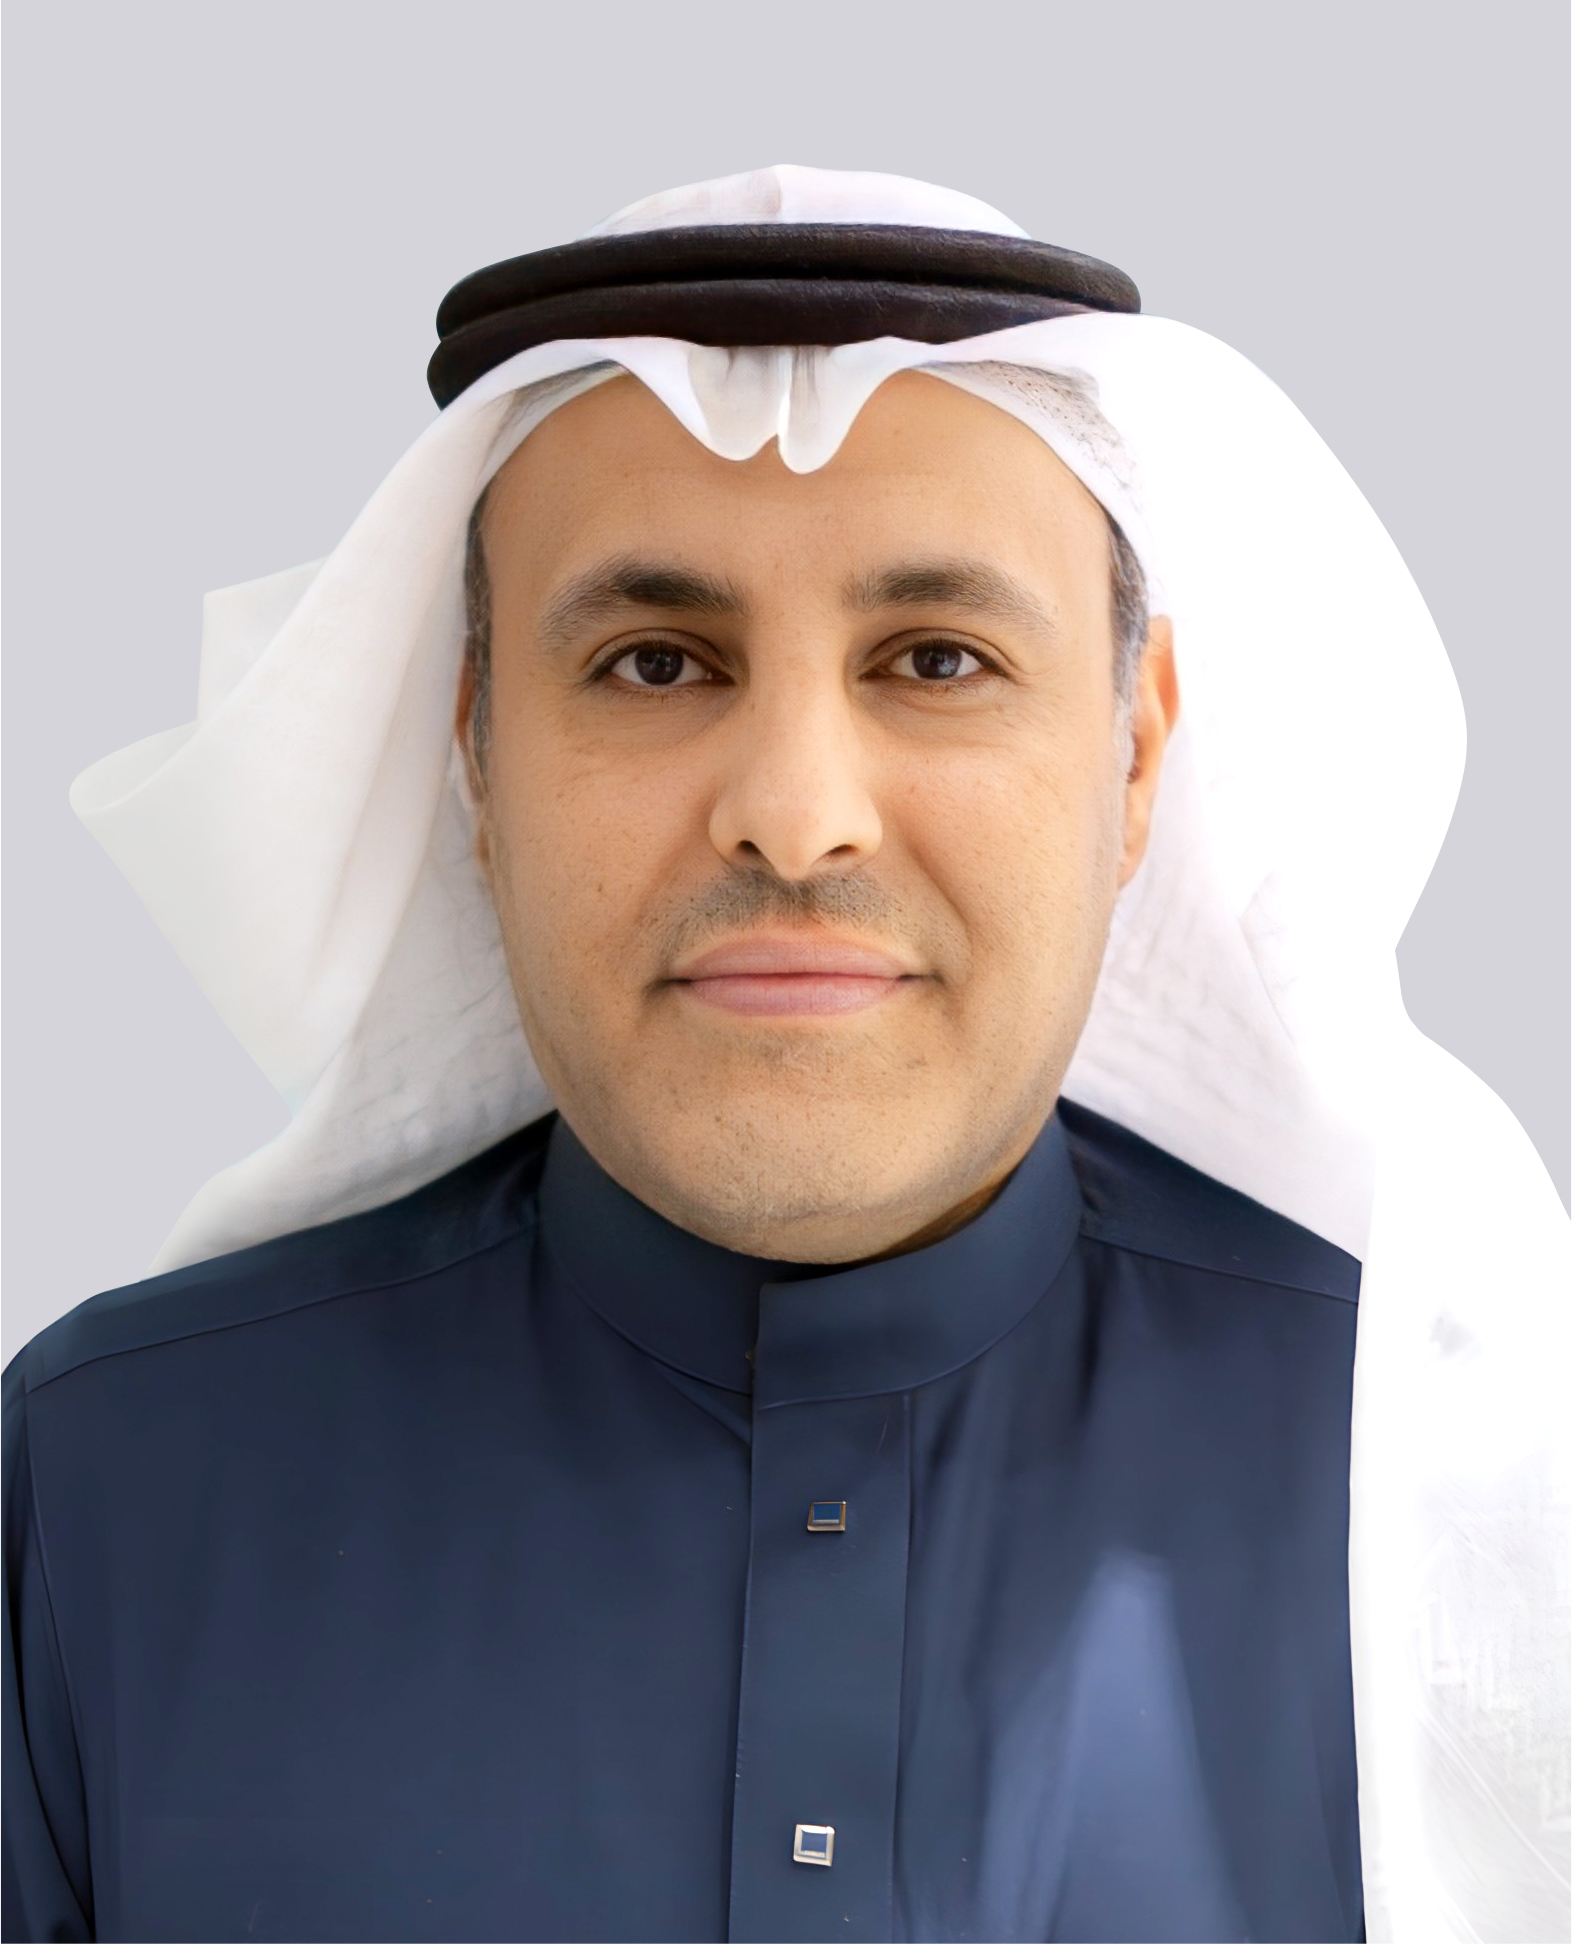 Mr. Hassan Khaled Al Otaibi 